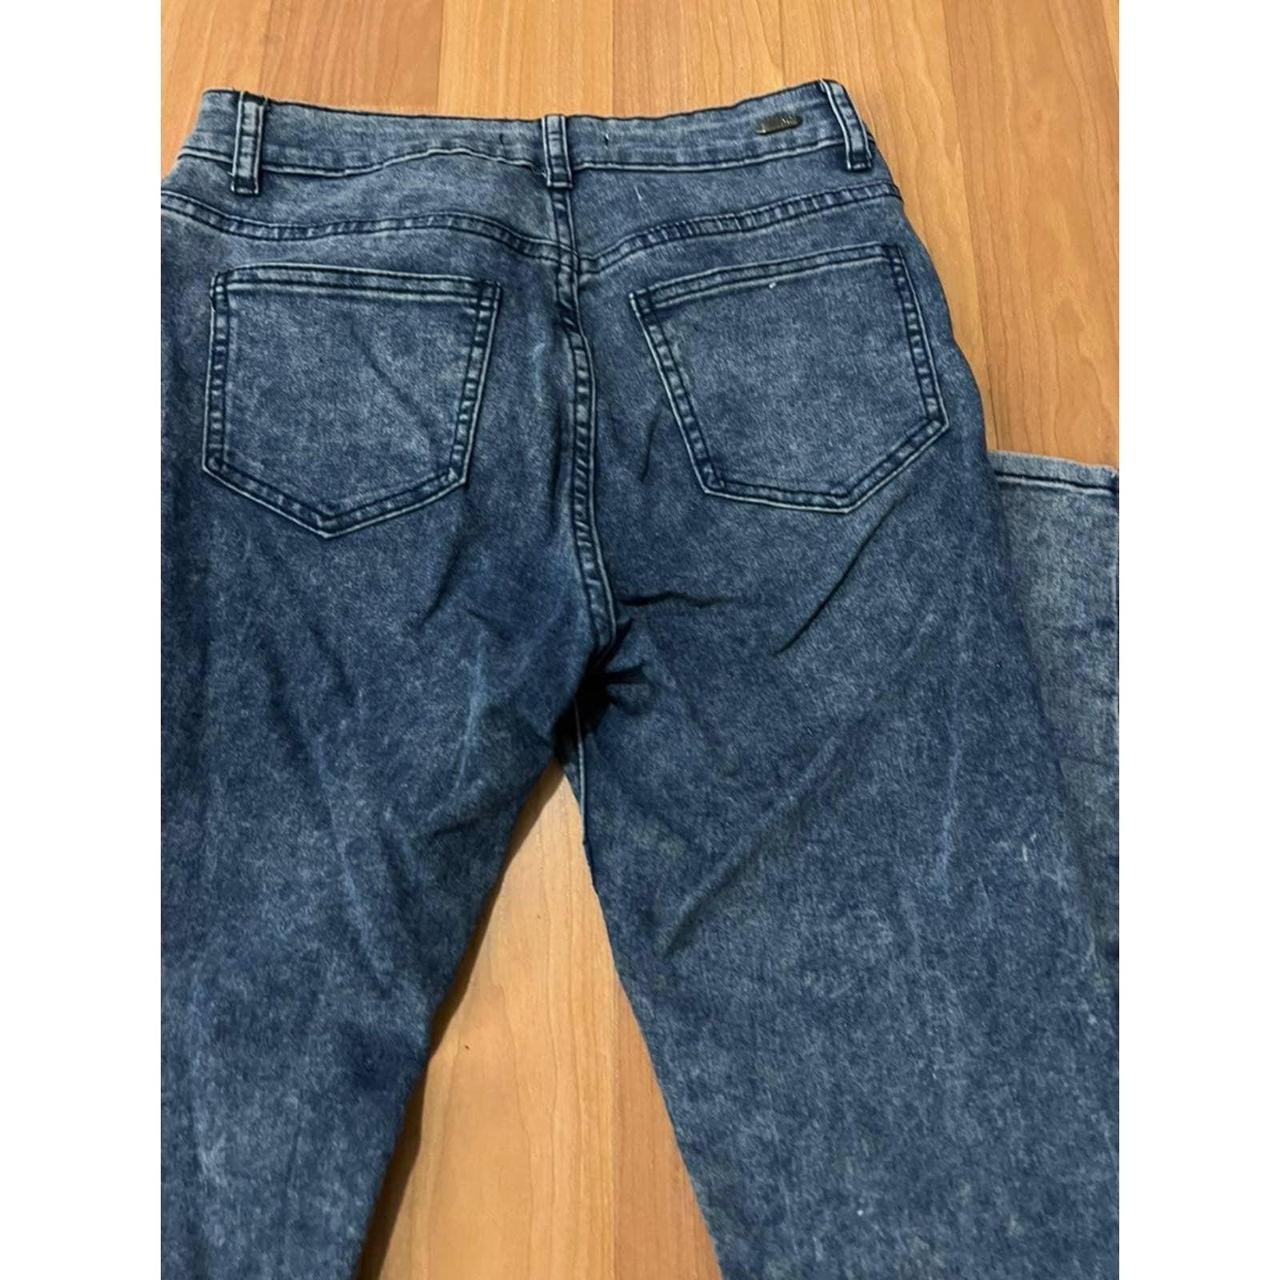 Product Image 3 - AQ Denim Women Jeans Size